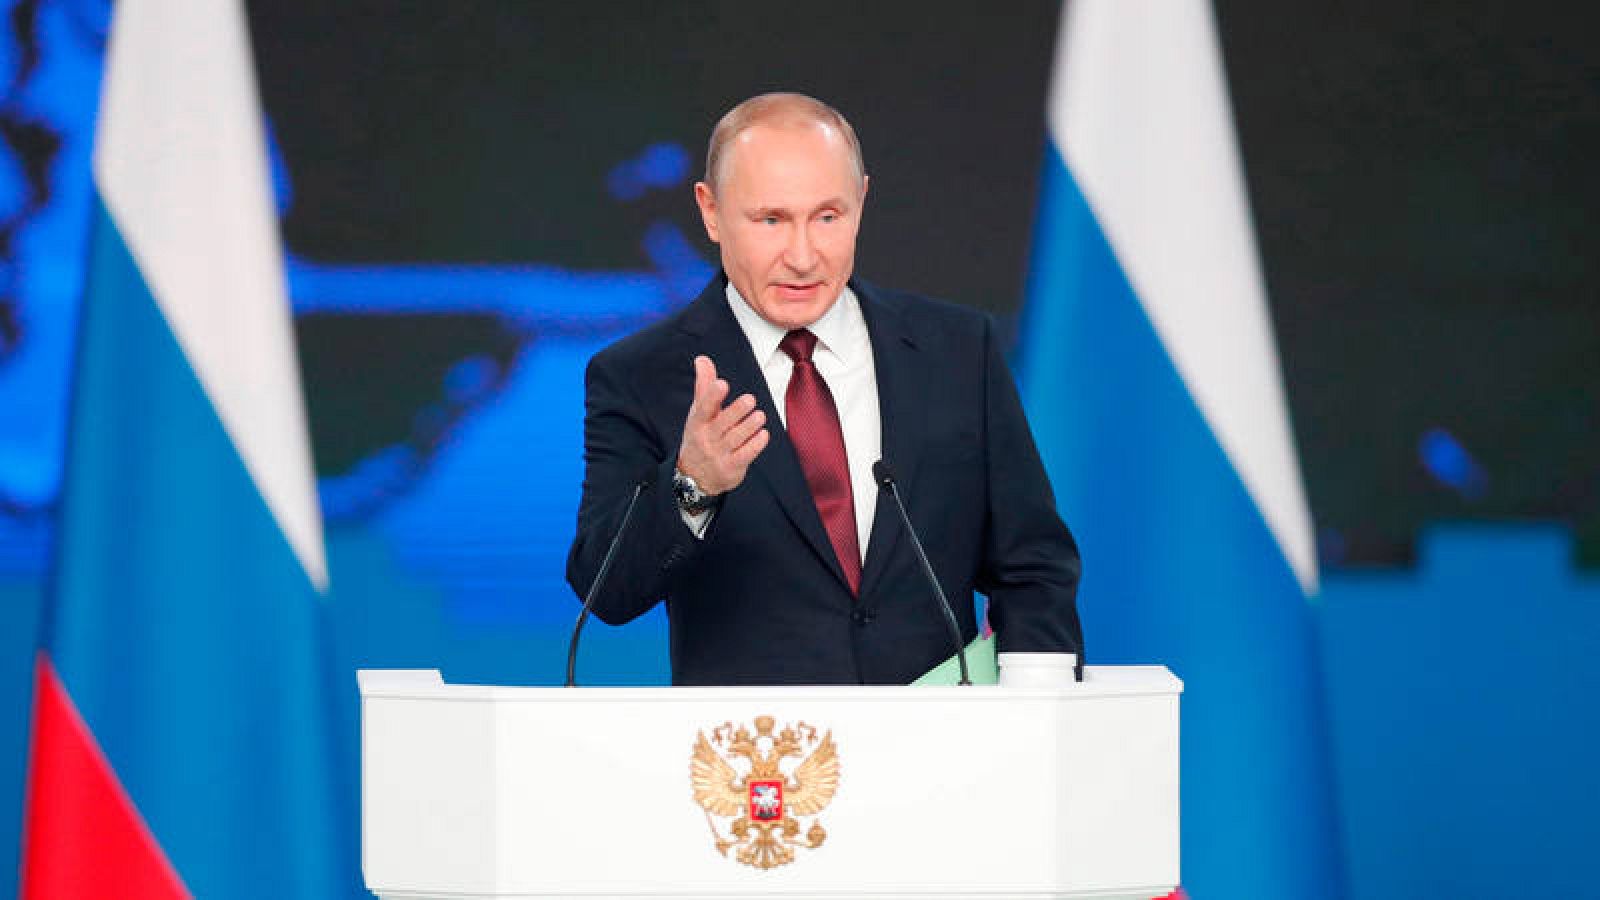 Putin intenta reflotar su popularidad amenazando a EE.UU. | RTVE